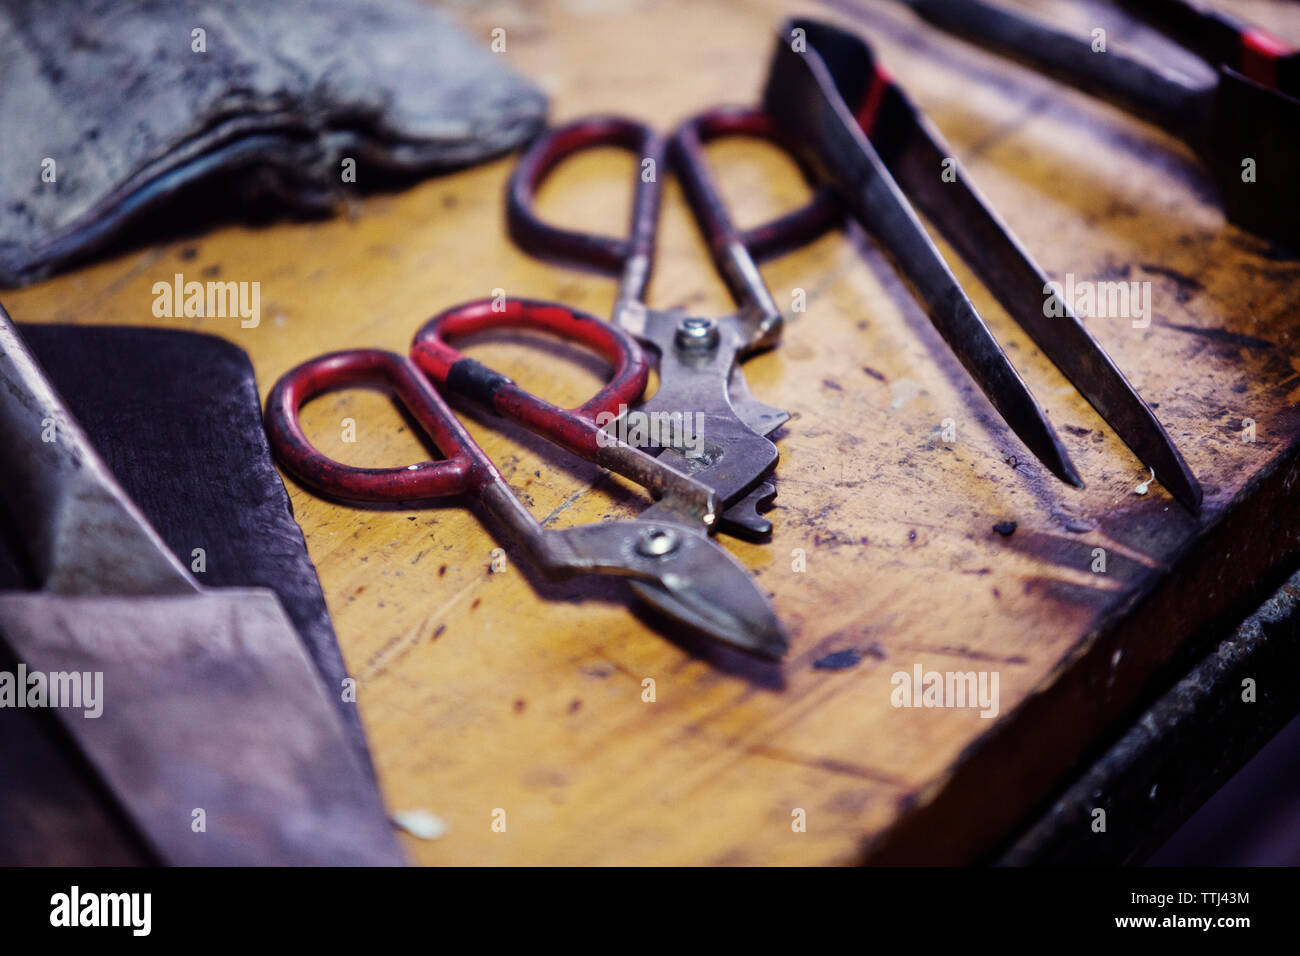 Scissors and tweezers on workbench at workshop Stock Photo